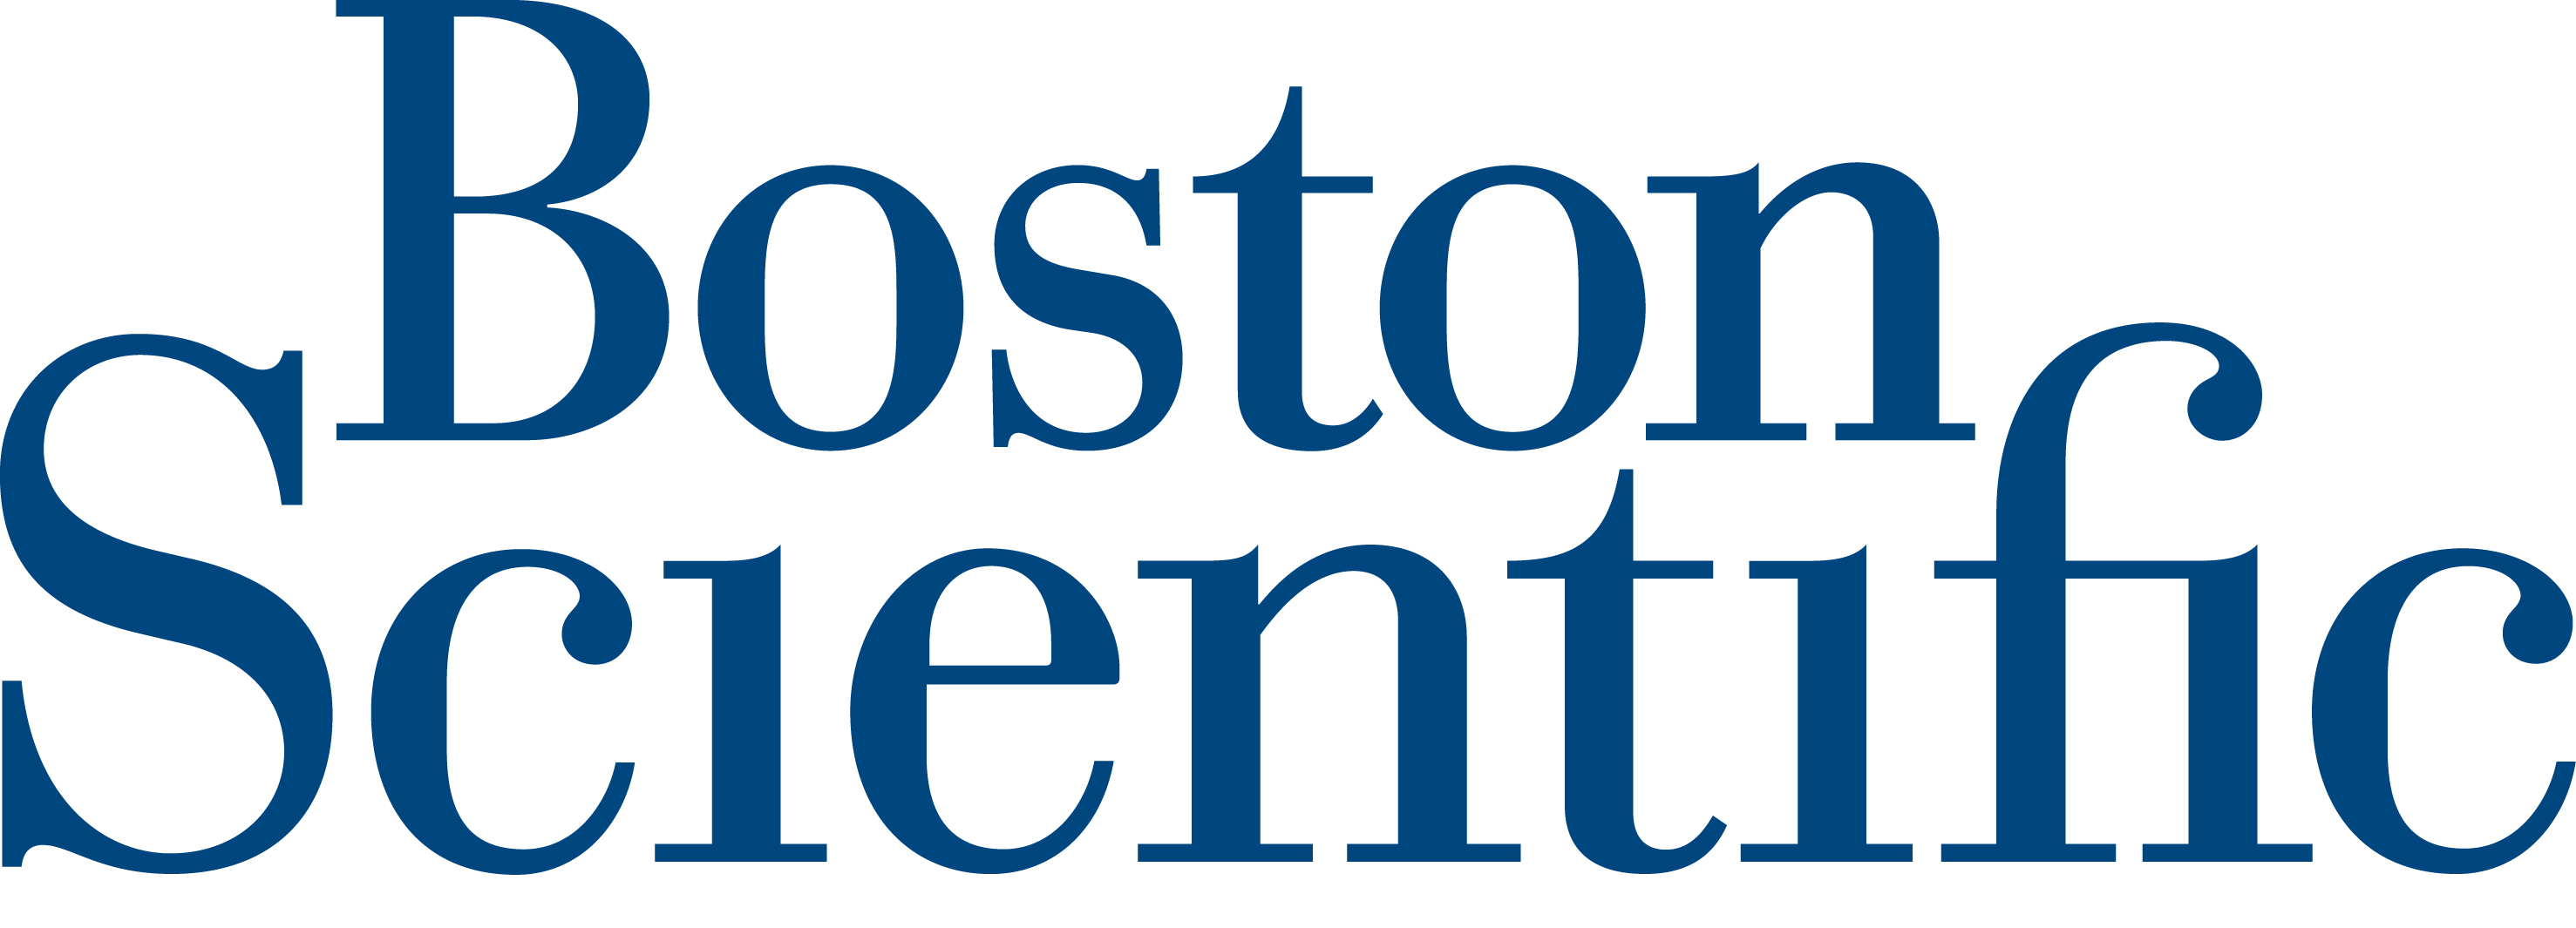 Image result for boston scientific logo